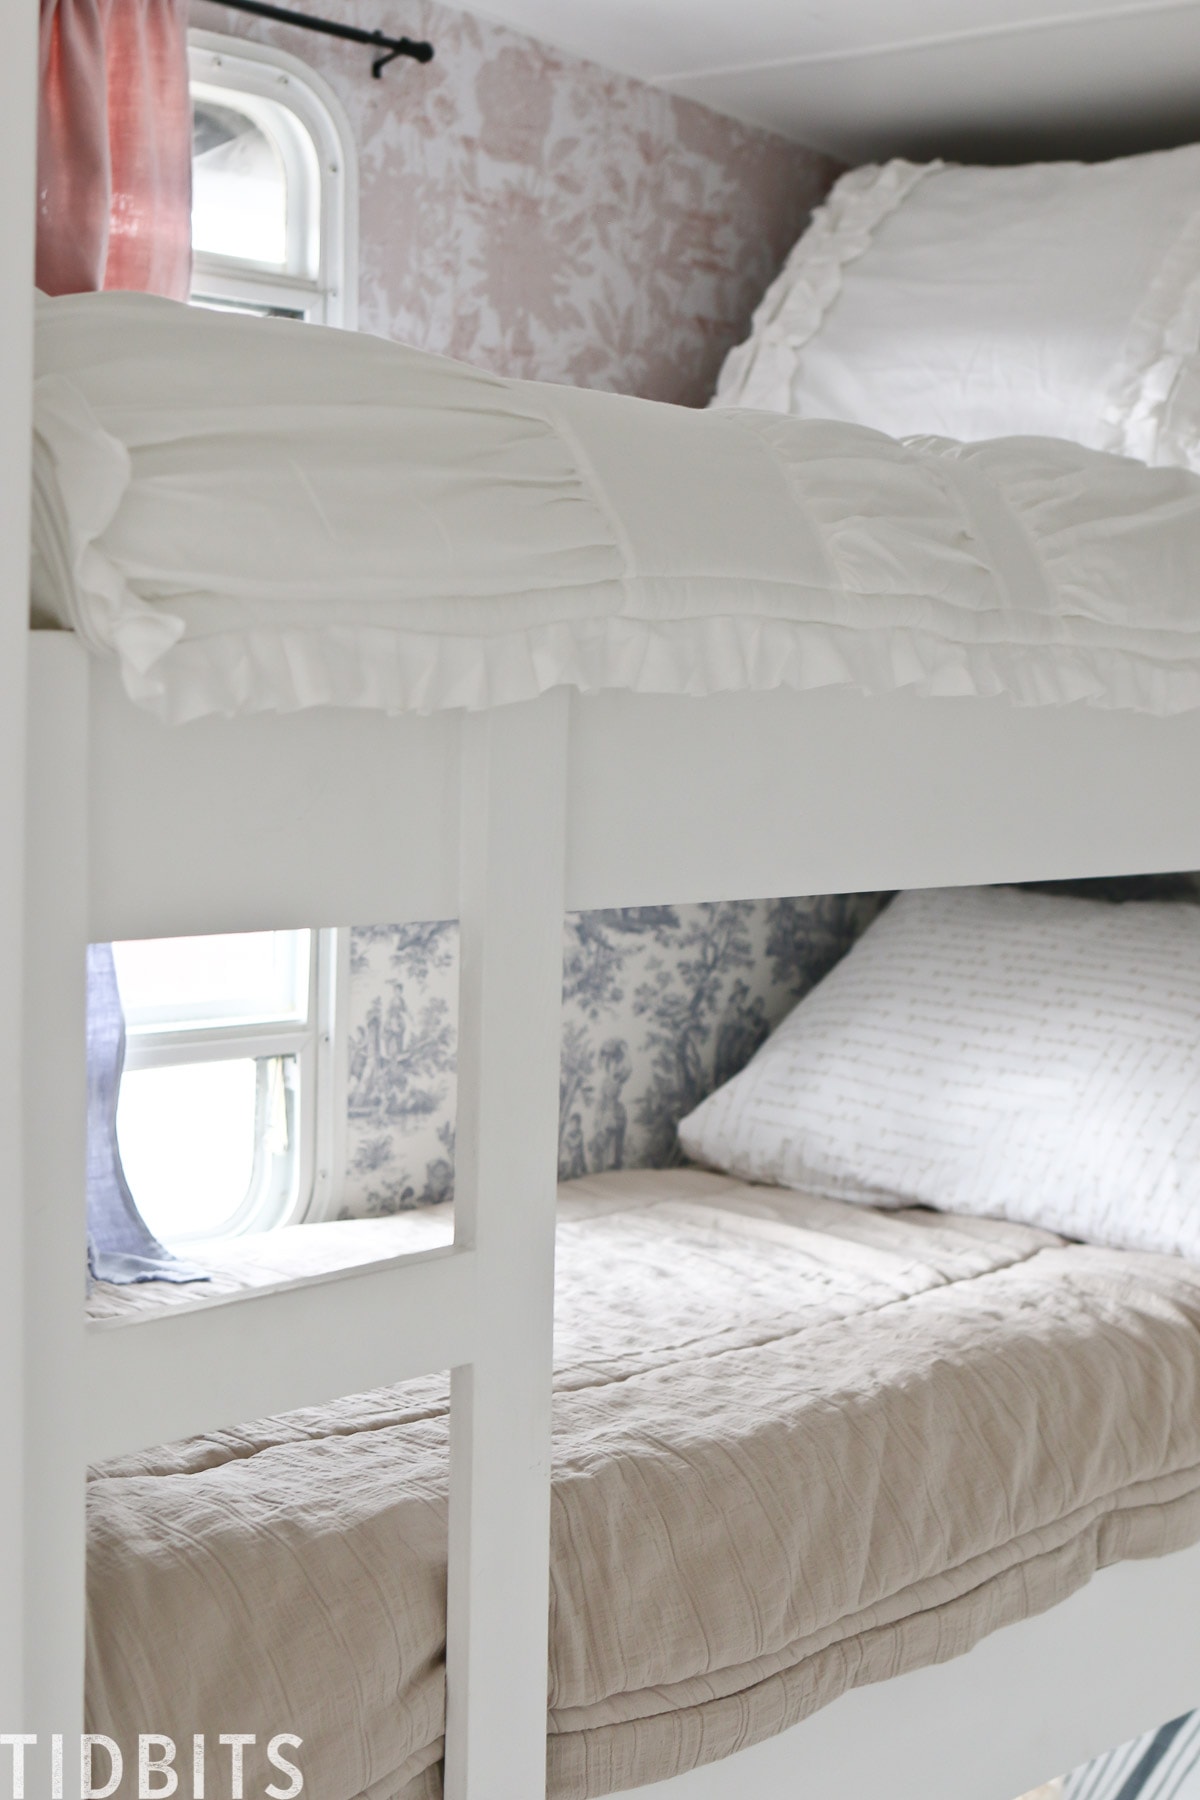 The Best Rv Bunk Bedding Tidbits, Narrow Bunk Bed Mattress